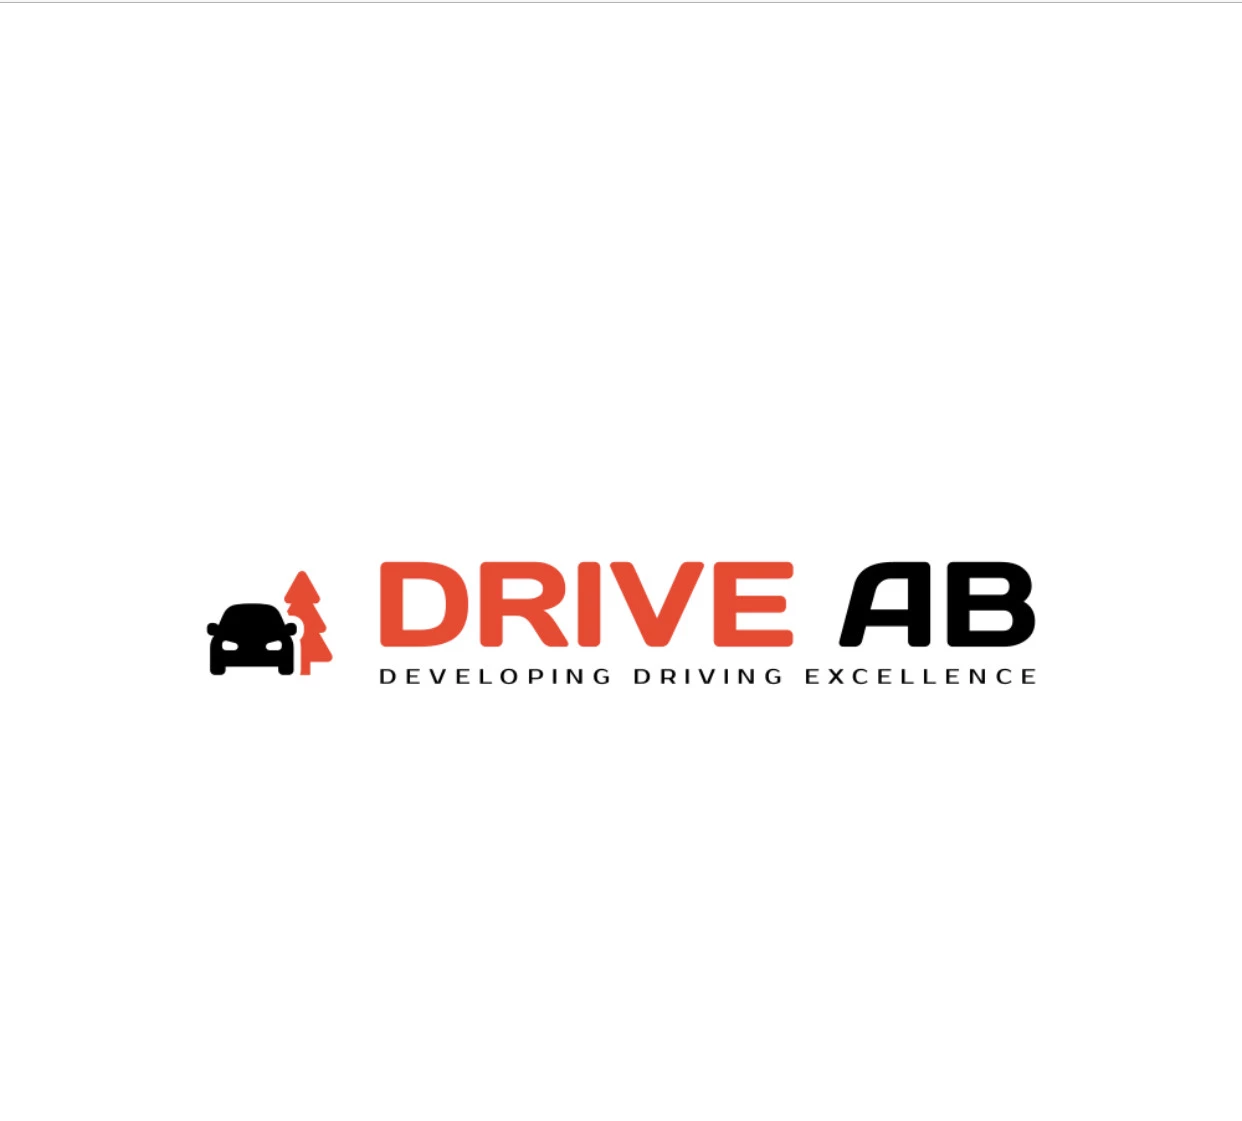 Drive AB